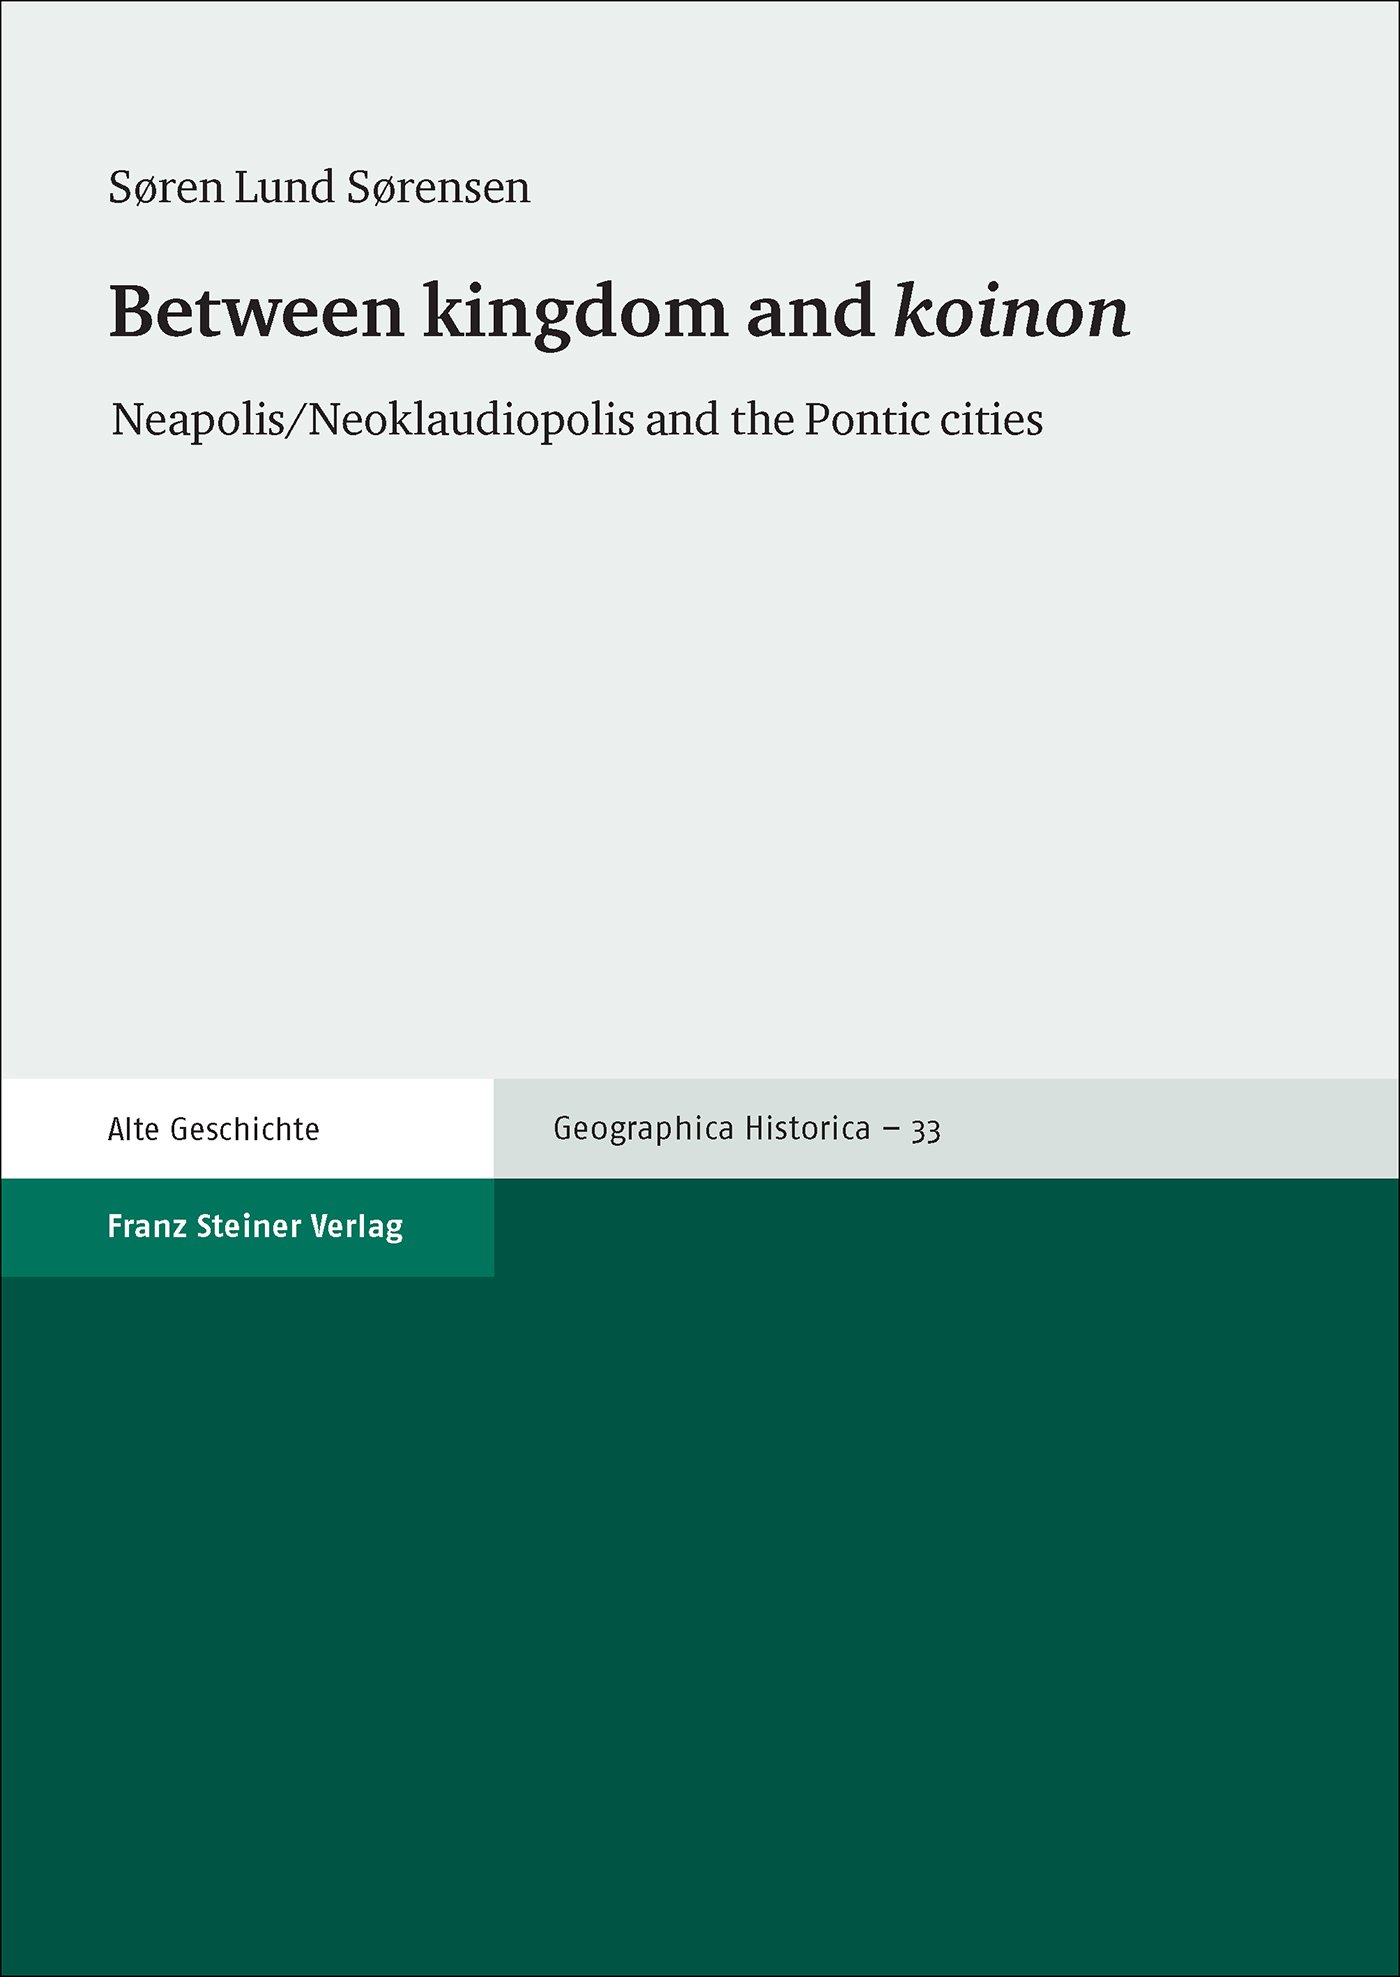 Between kingdom and "koinon"
